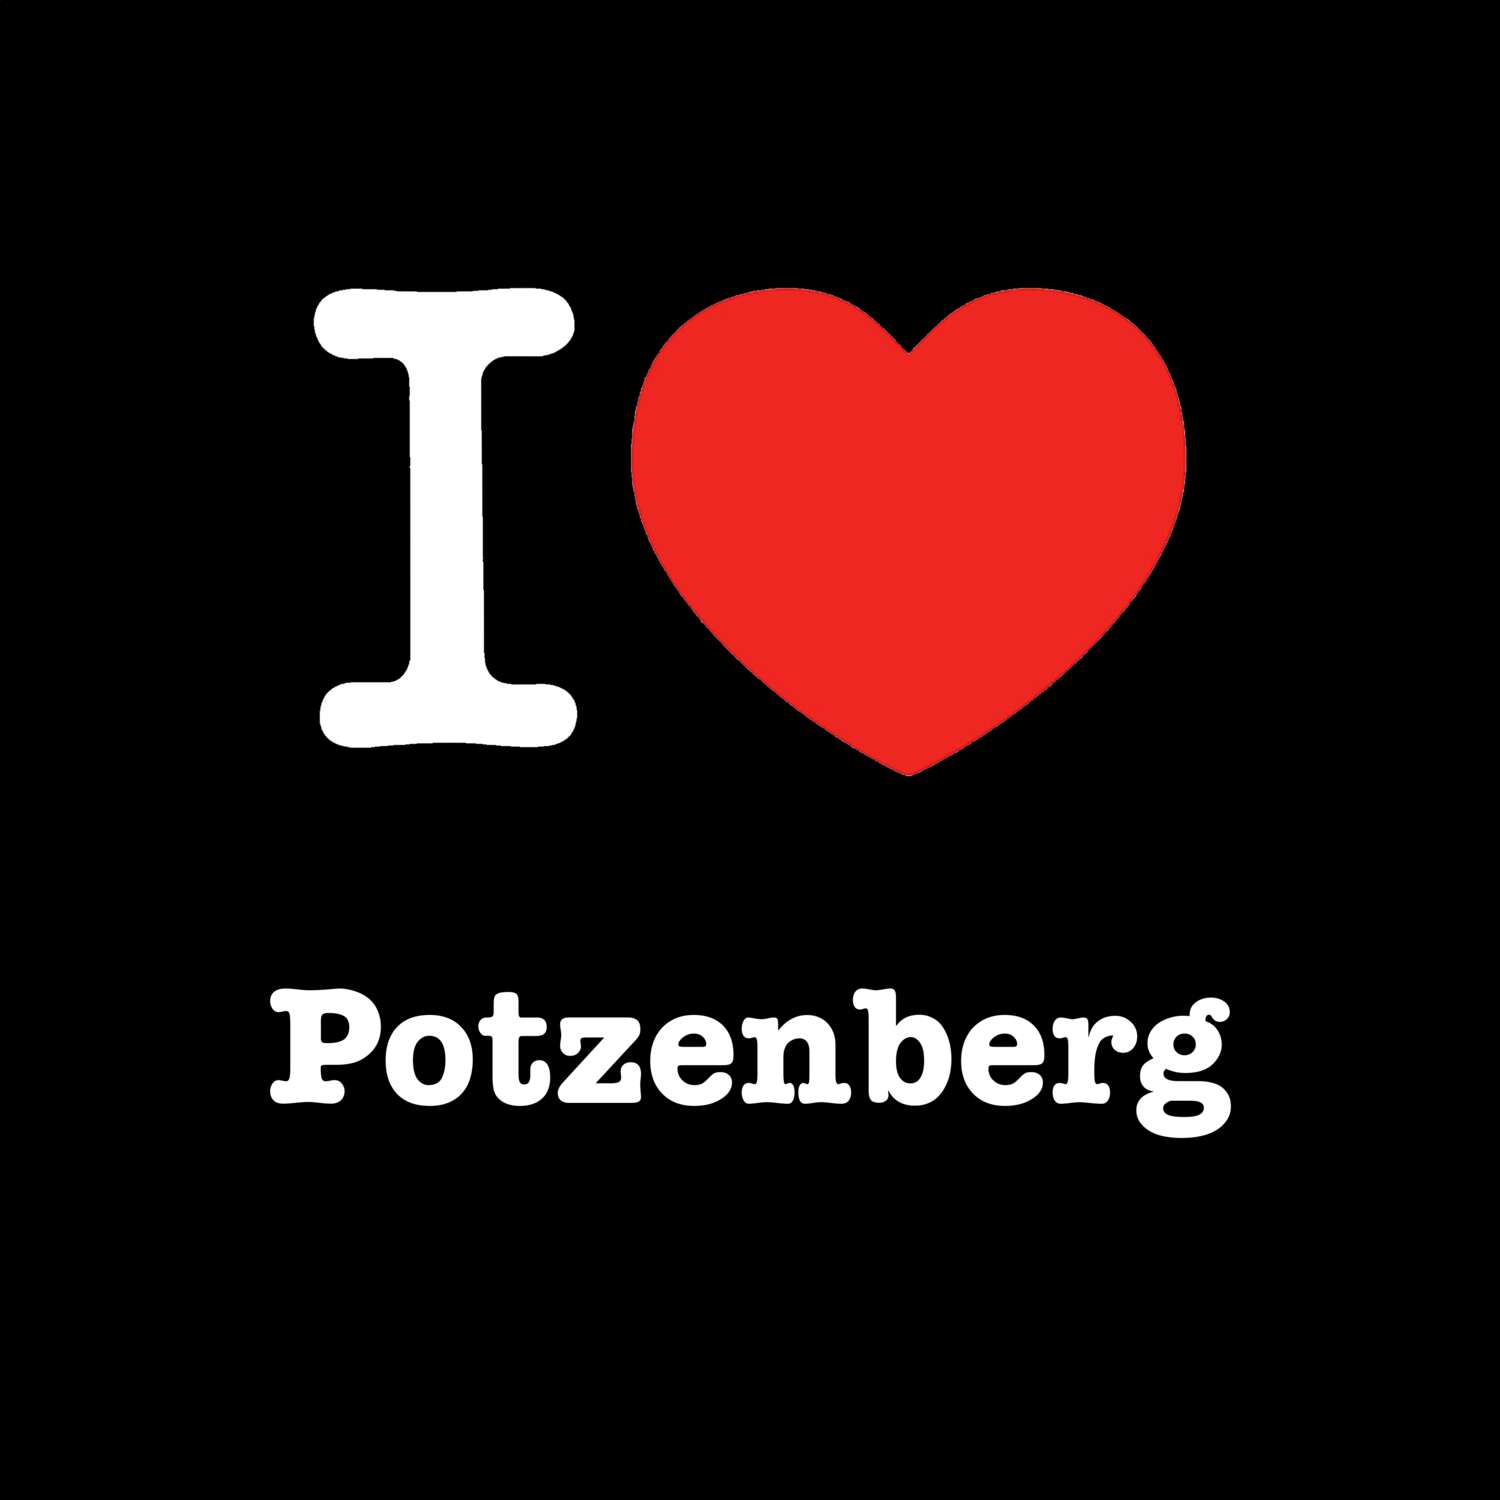 Potzenberg T-Shirt »I love«